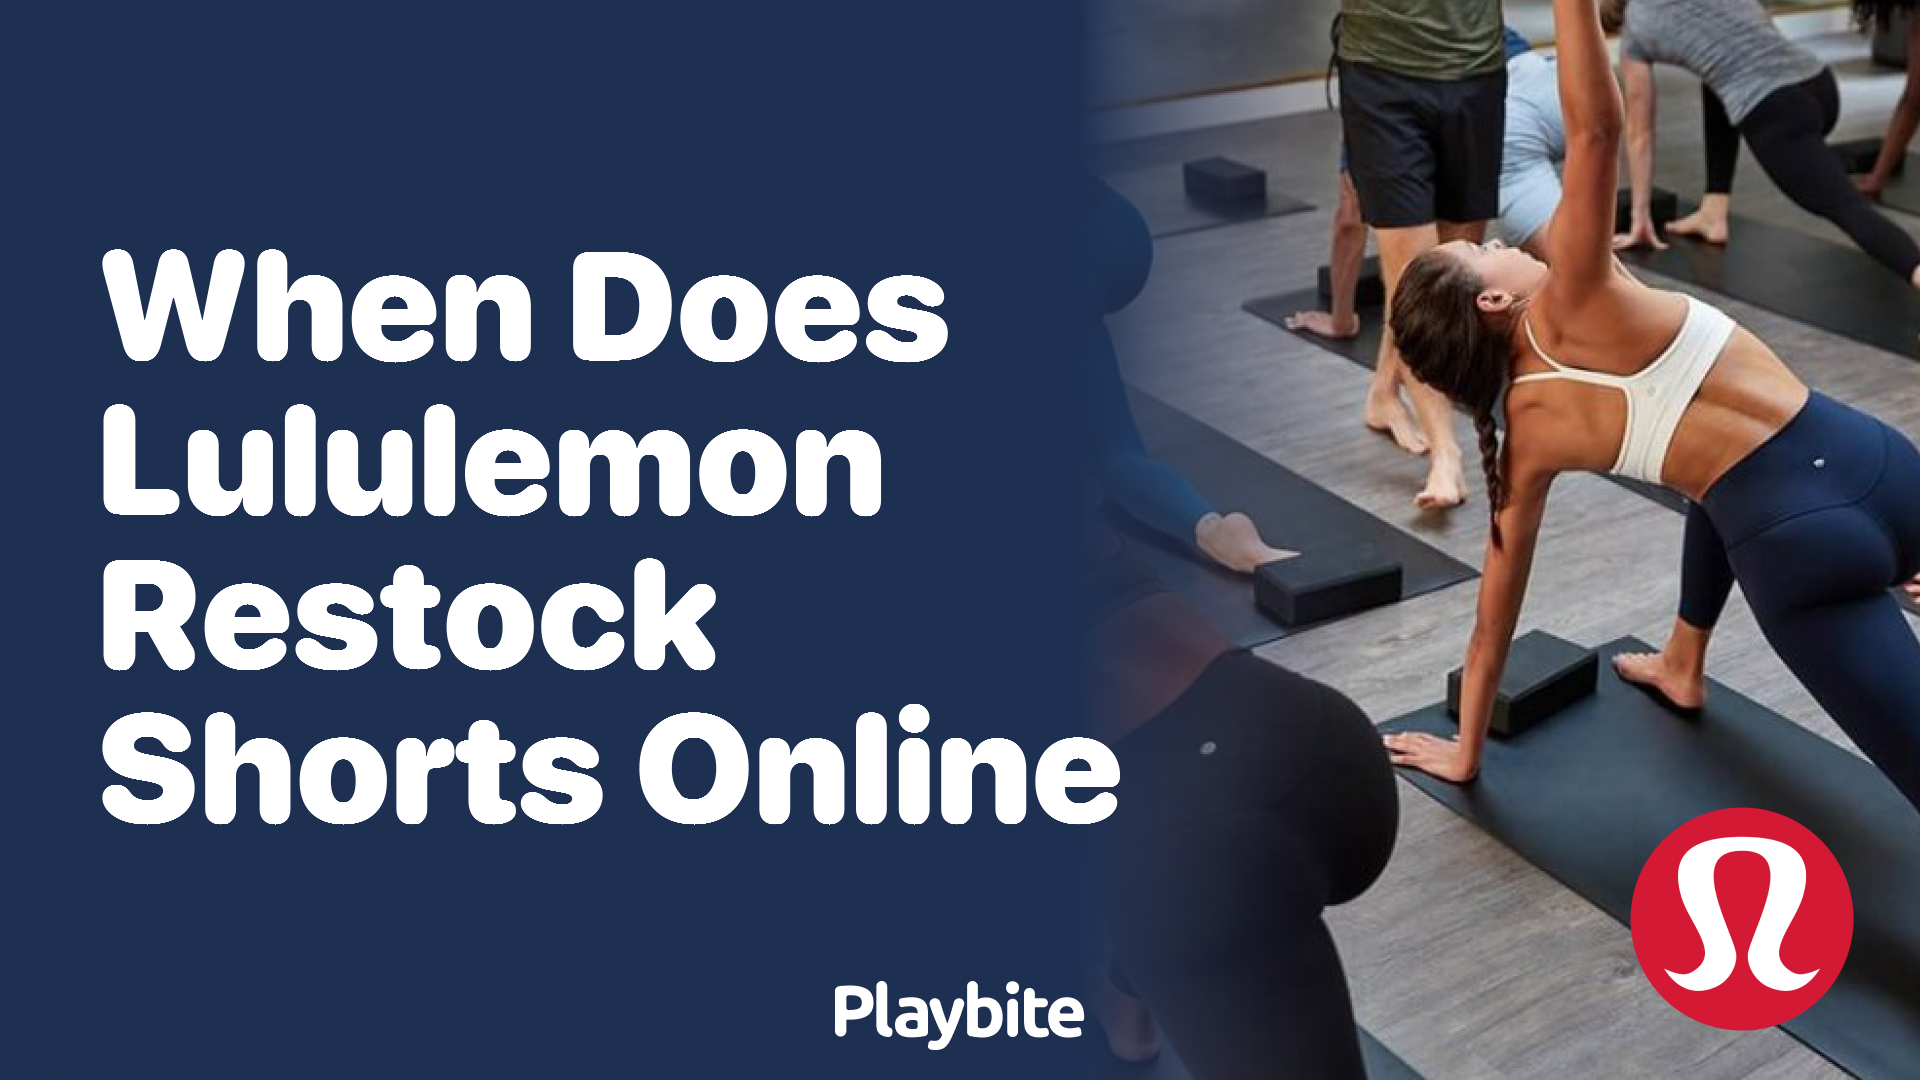 When Does Lululemon Restock Online? - Playbite